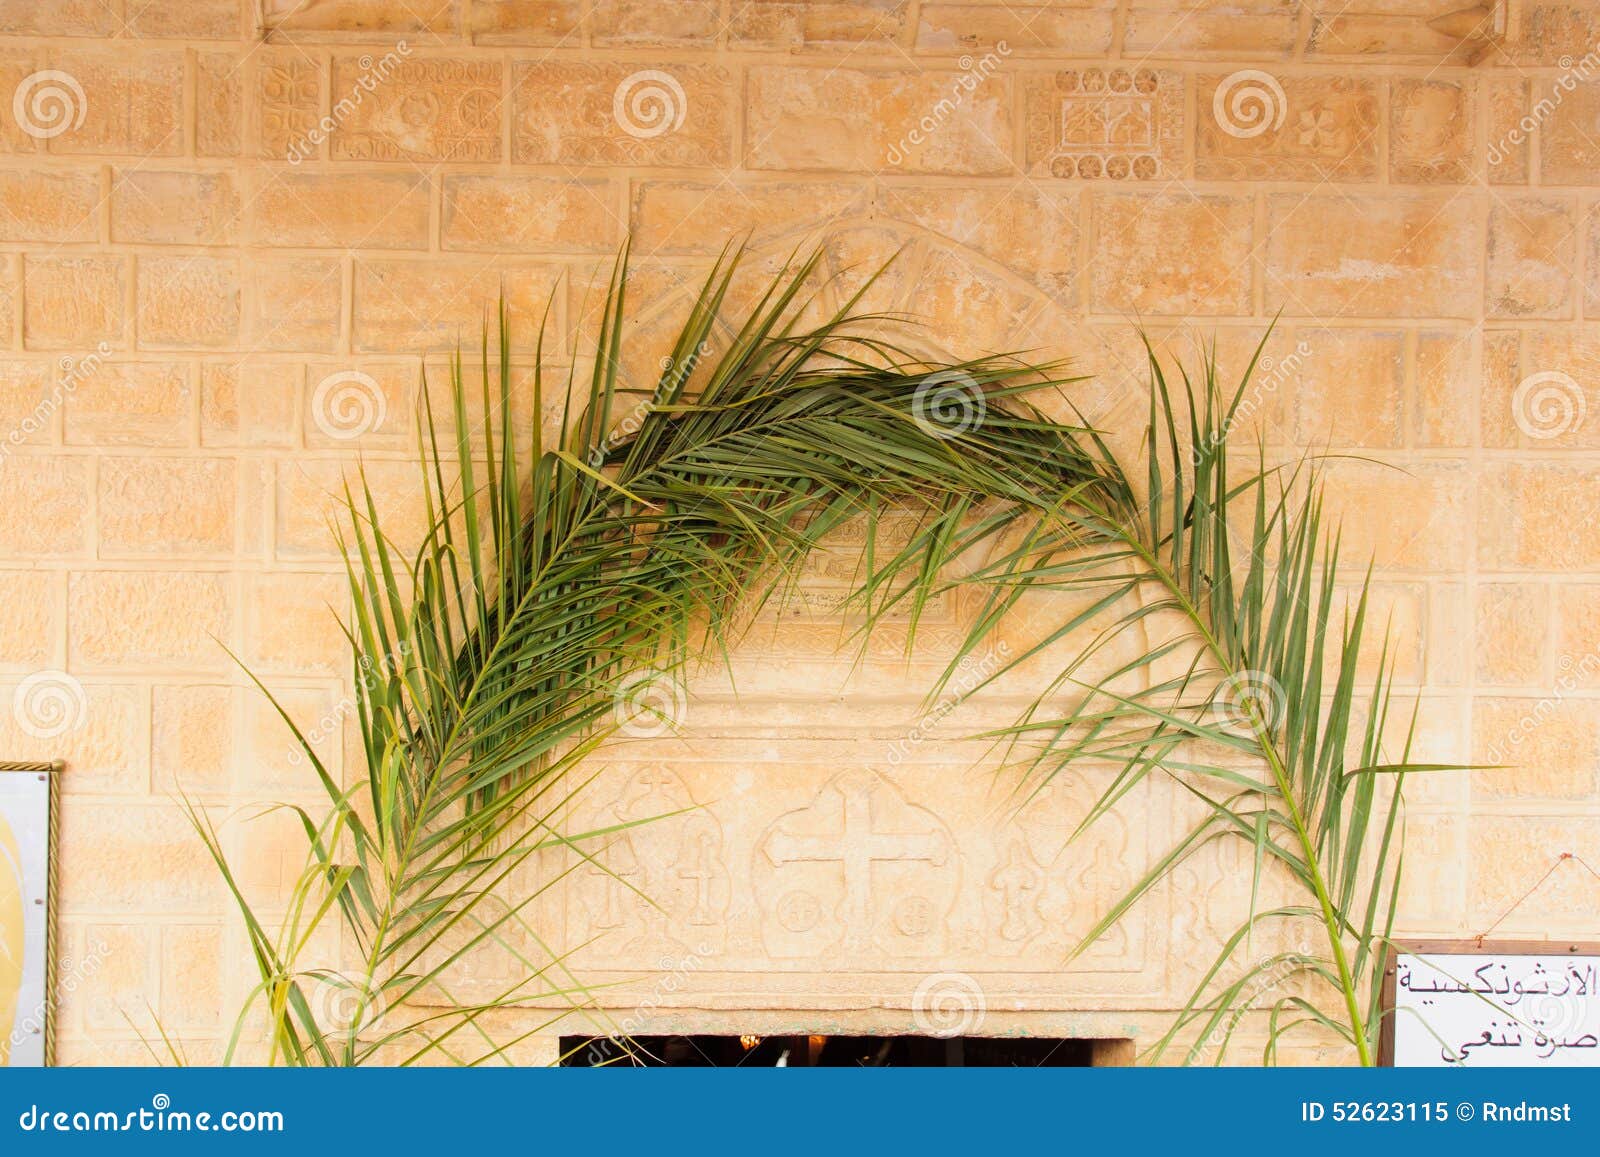 Orthodox Palm Sunday in Nazareth Editorial Image Image of children